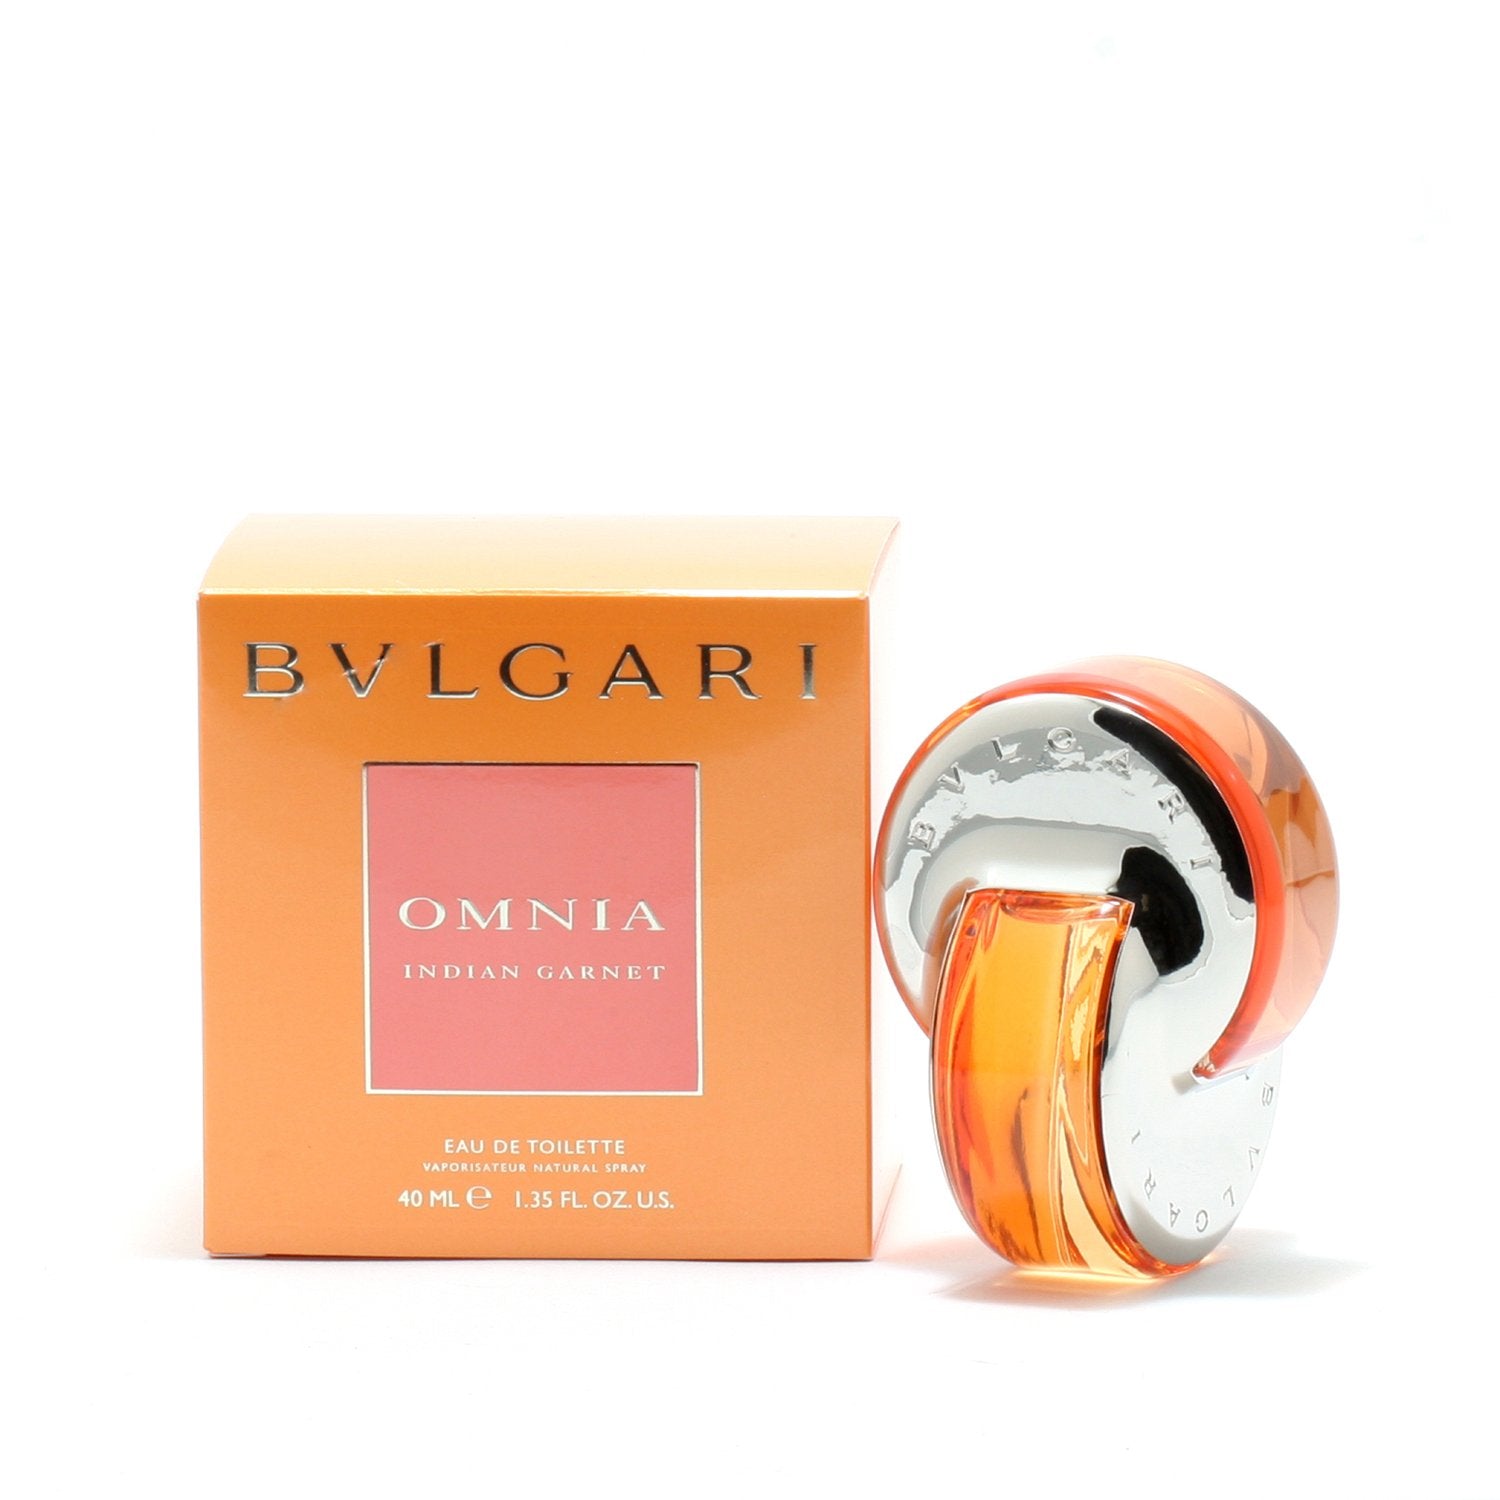 Perfume - OMNIA INDIAN GARNET FOR WOMEN BY BVLGARI - EAU DE TOILETTE SPRAY